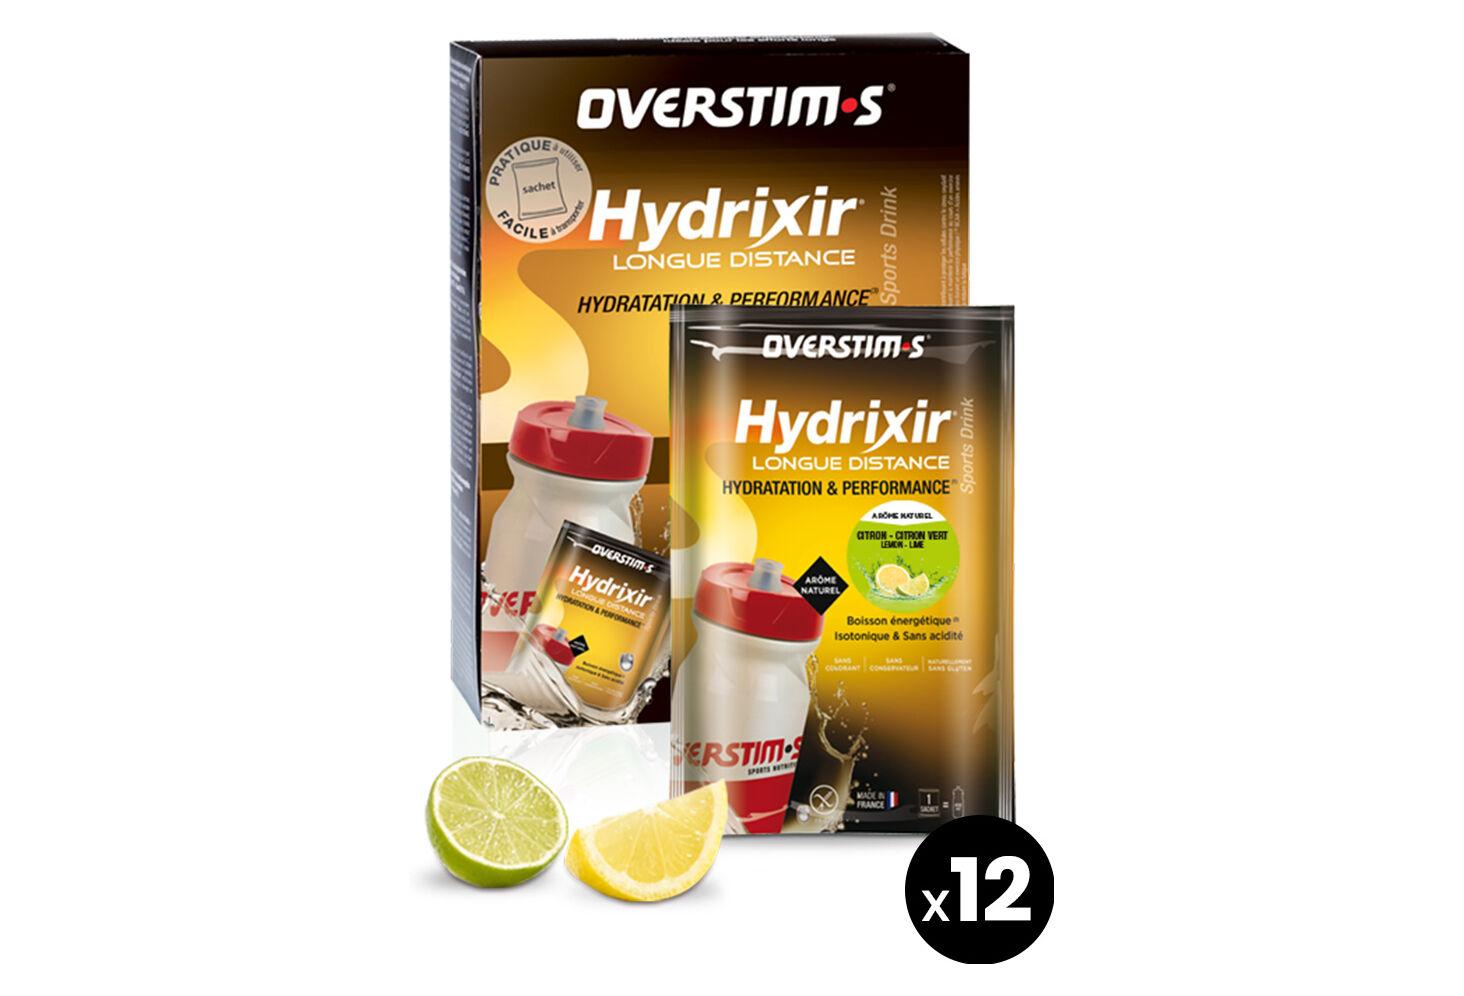 Overstim.s Hydrixir Longue Distance - Energy drink